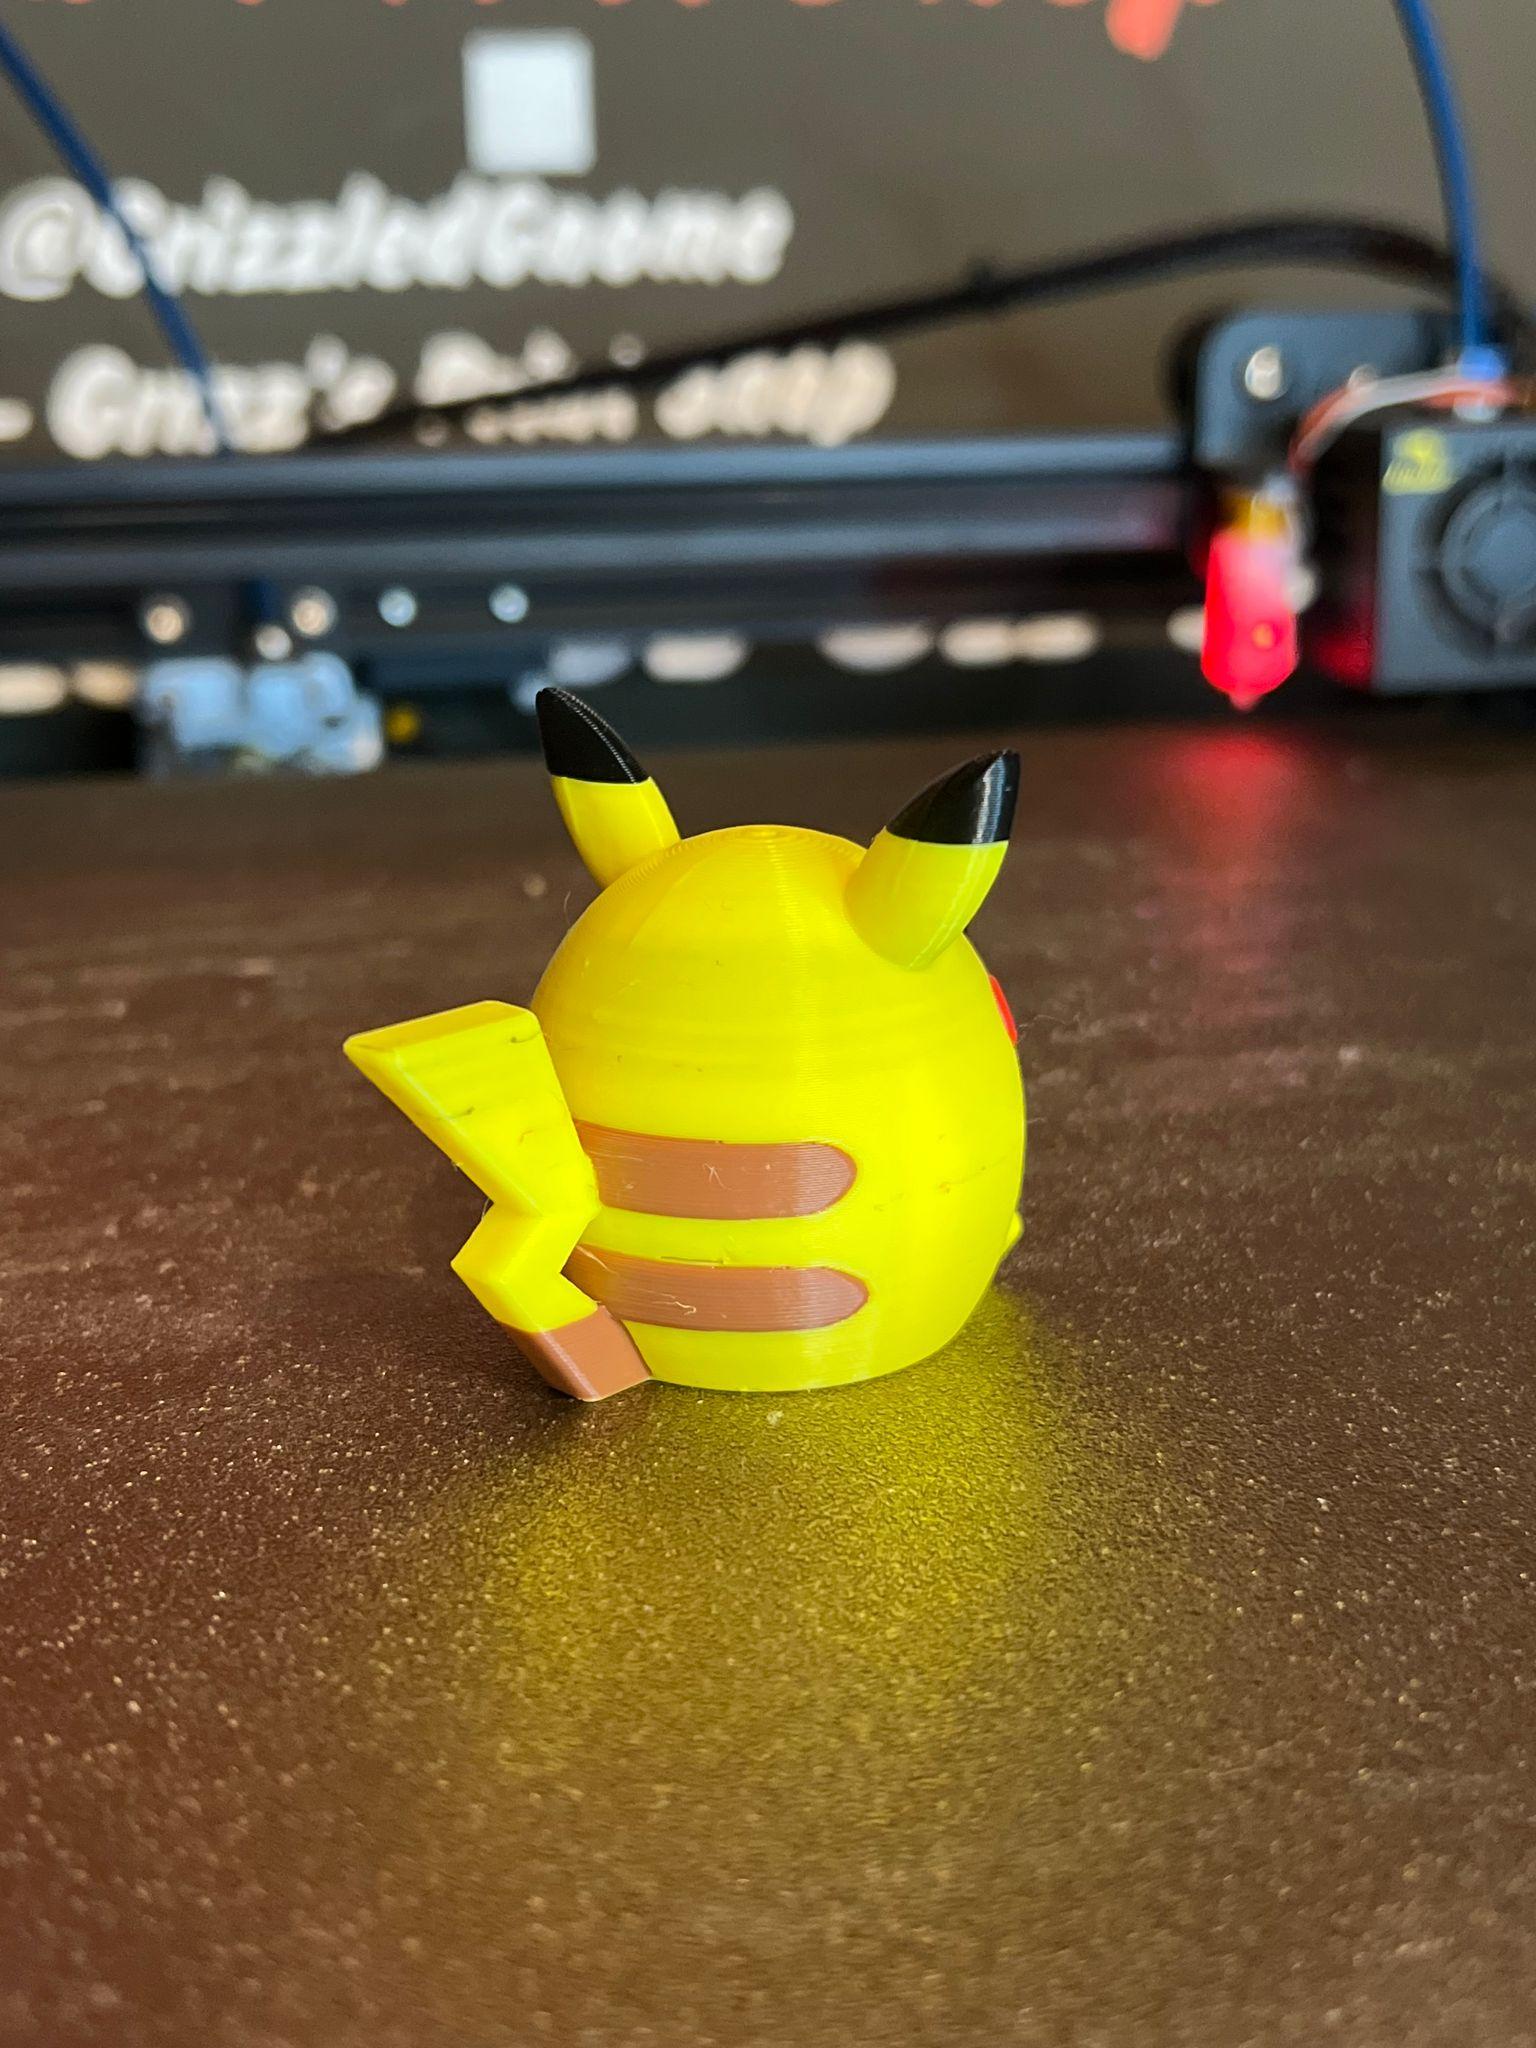 Chubby Pikachu - Print in Place 3d model